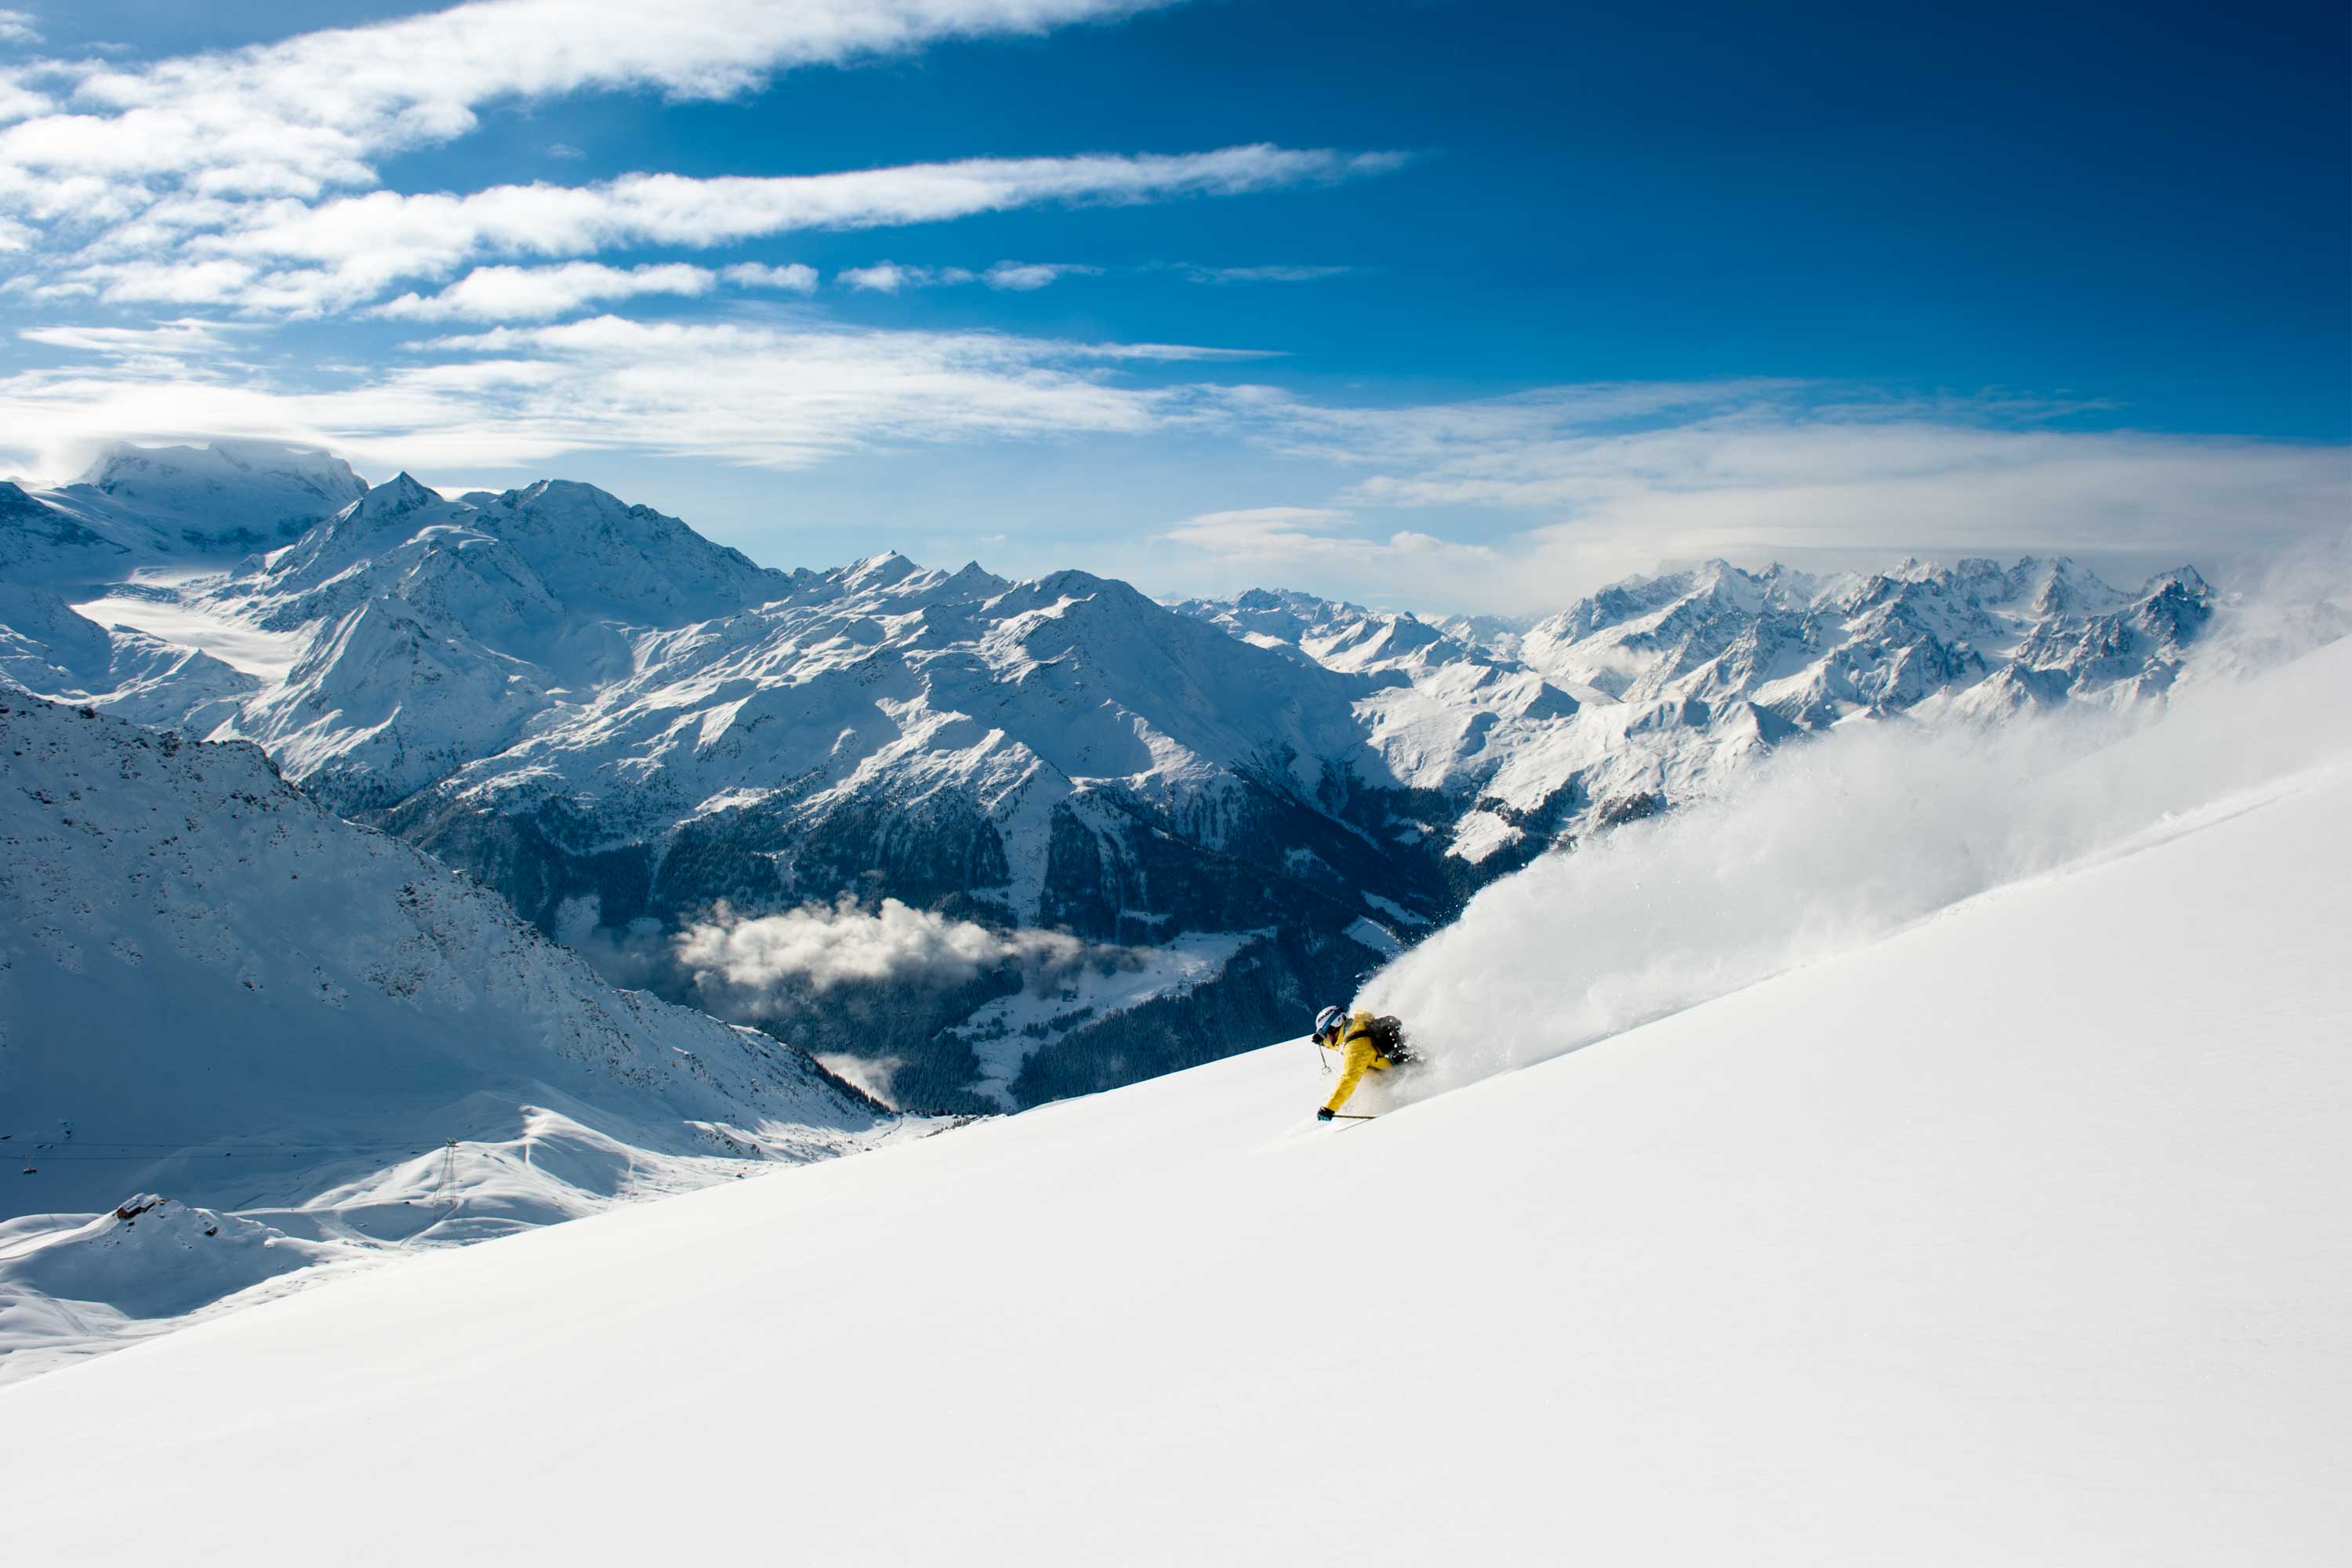 A ski holiday in Verbier Ski Resort in Switzerland